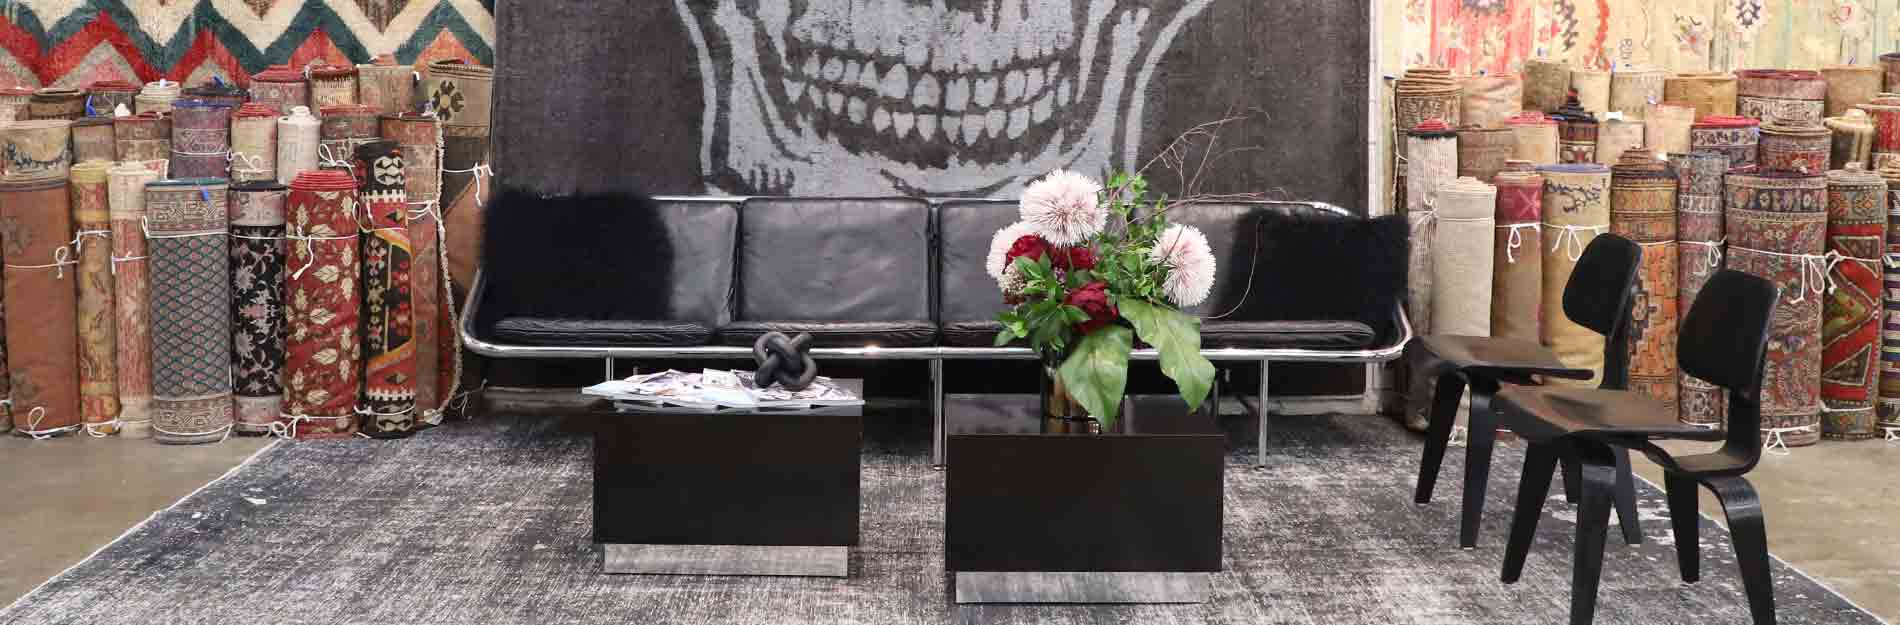 Overdyed Rugs Dallas Bespoke Design Skull Carpets Esmaili